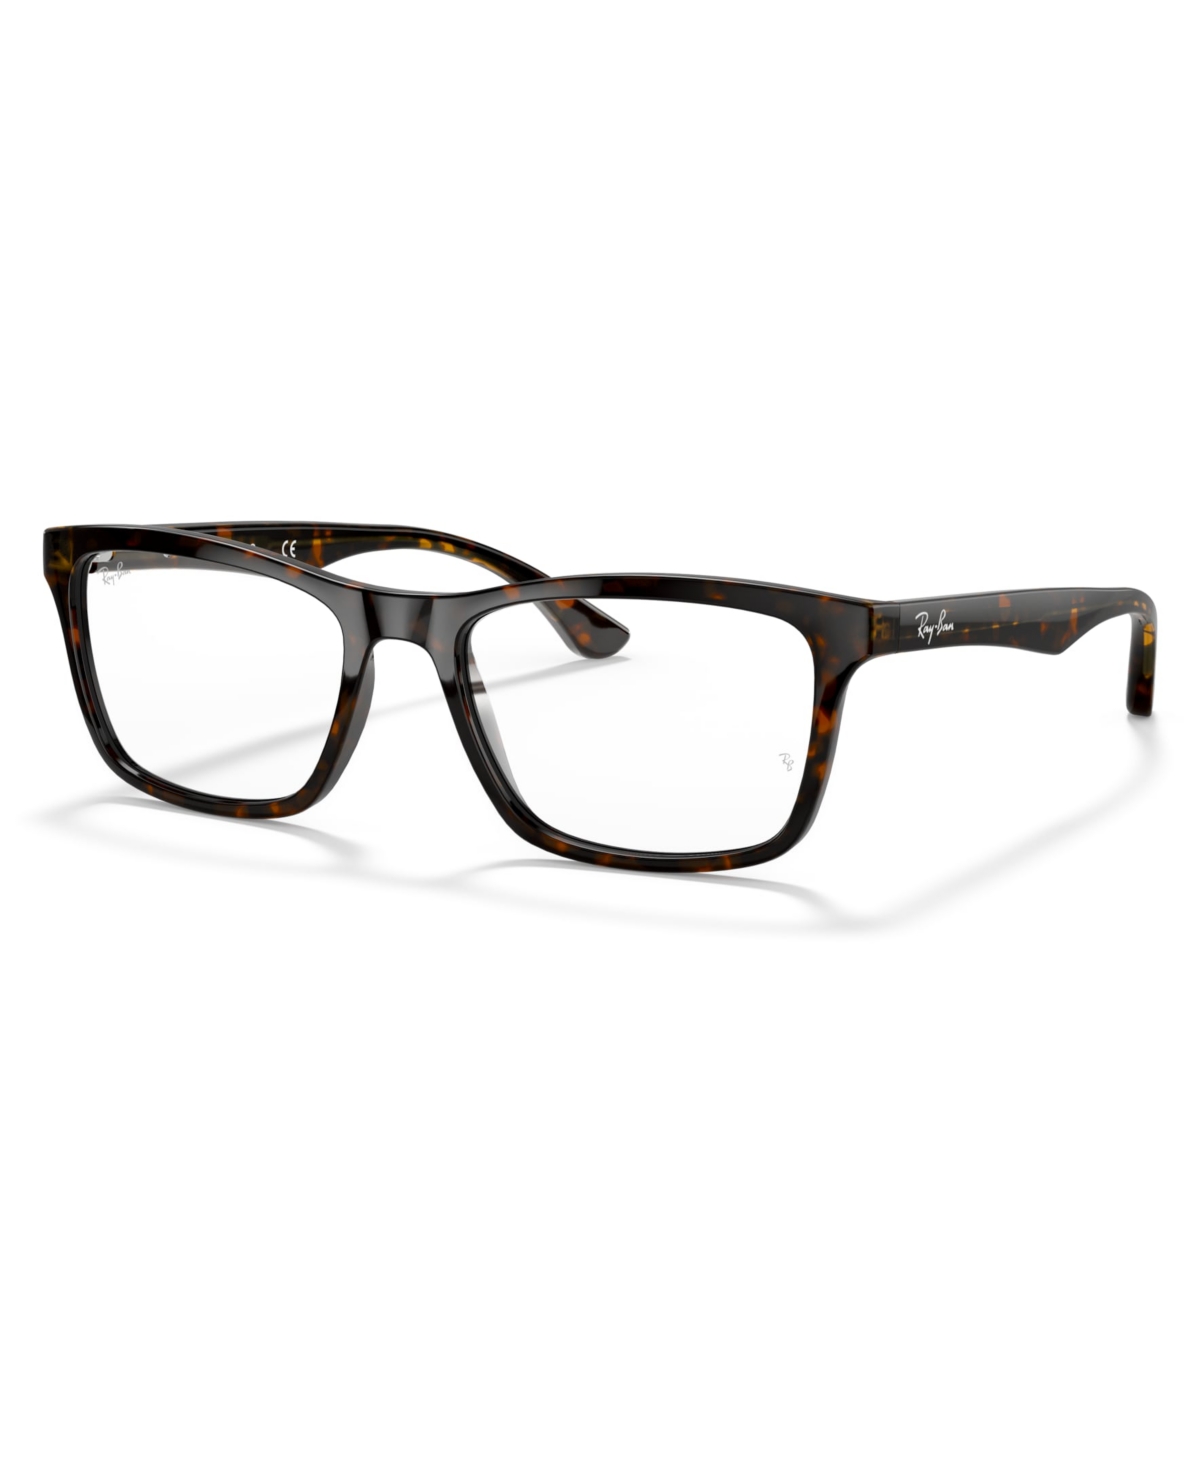 RX5279 Unisex Square Eyeglasses - Gray